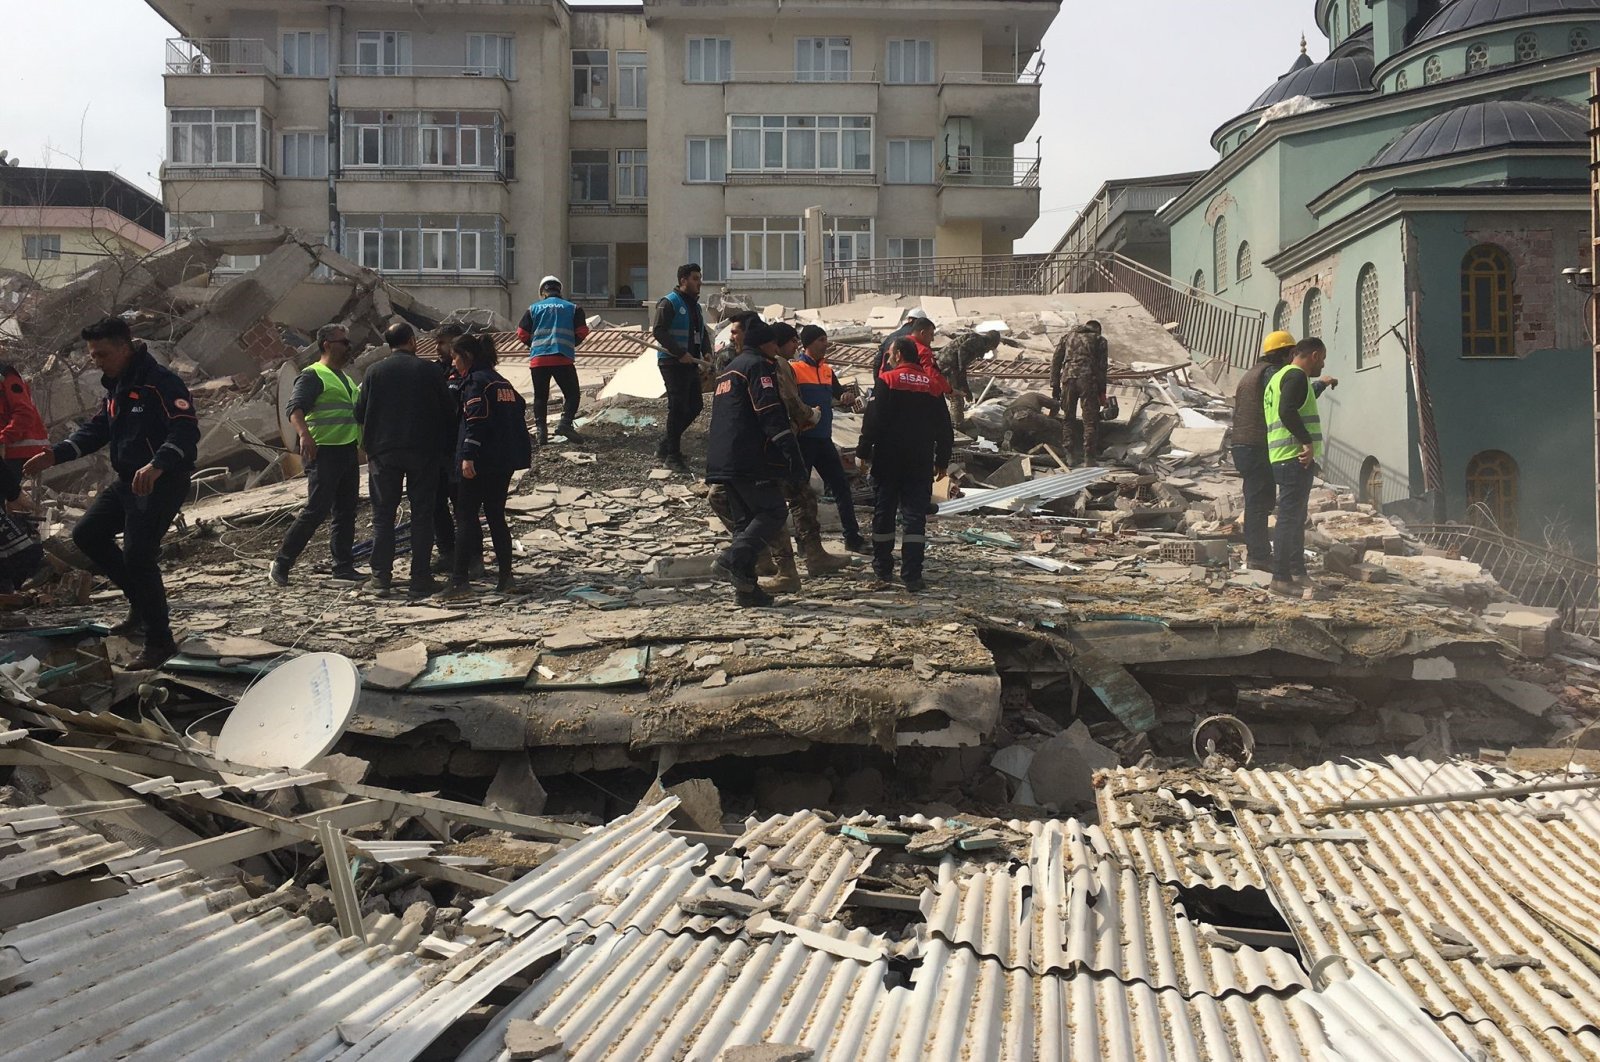 Search teams are seen near the rubble of a collapsed building, in Malatya, Türkiye, Feb. 27, 2023. (IHA Photo)